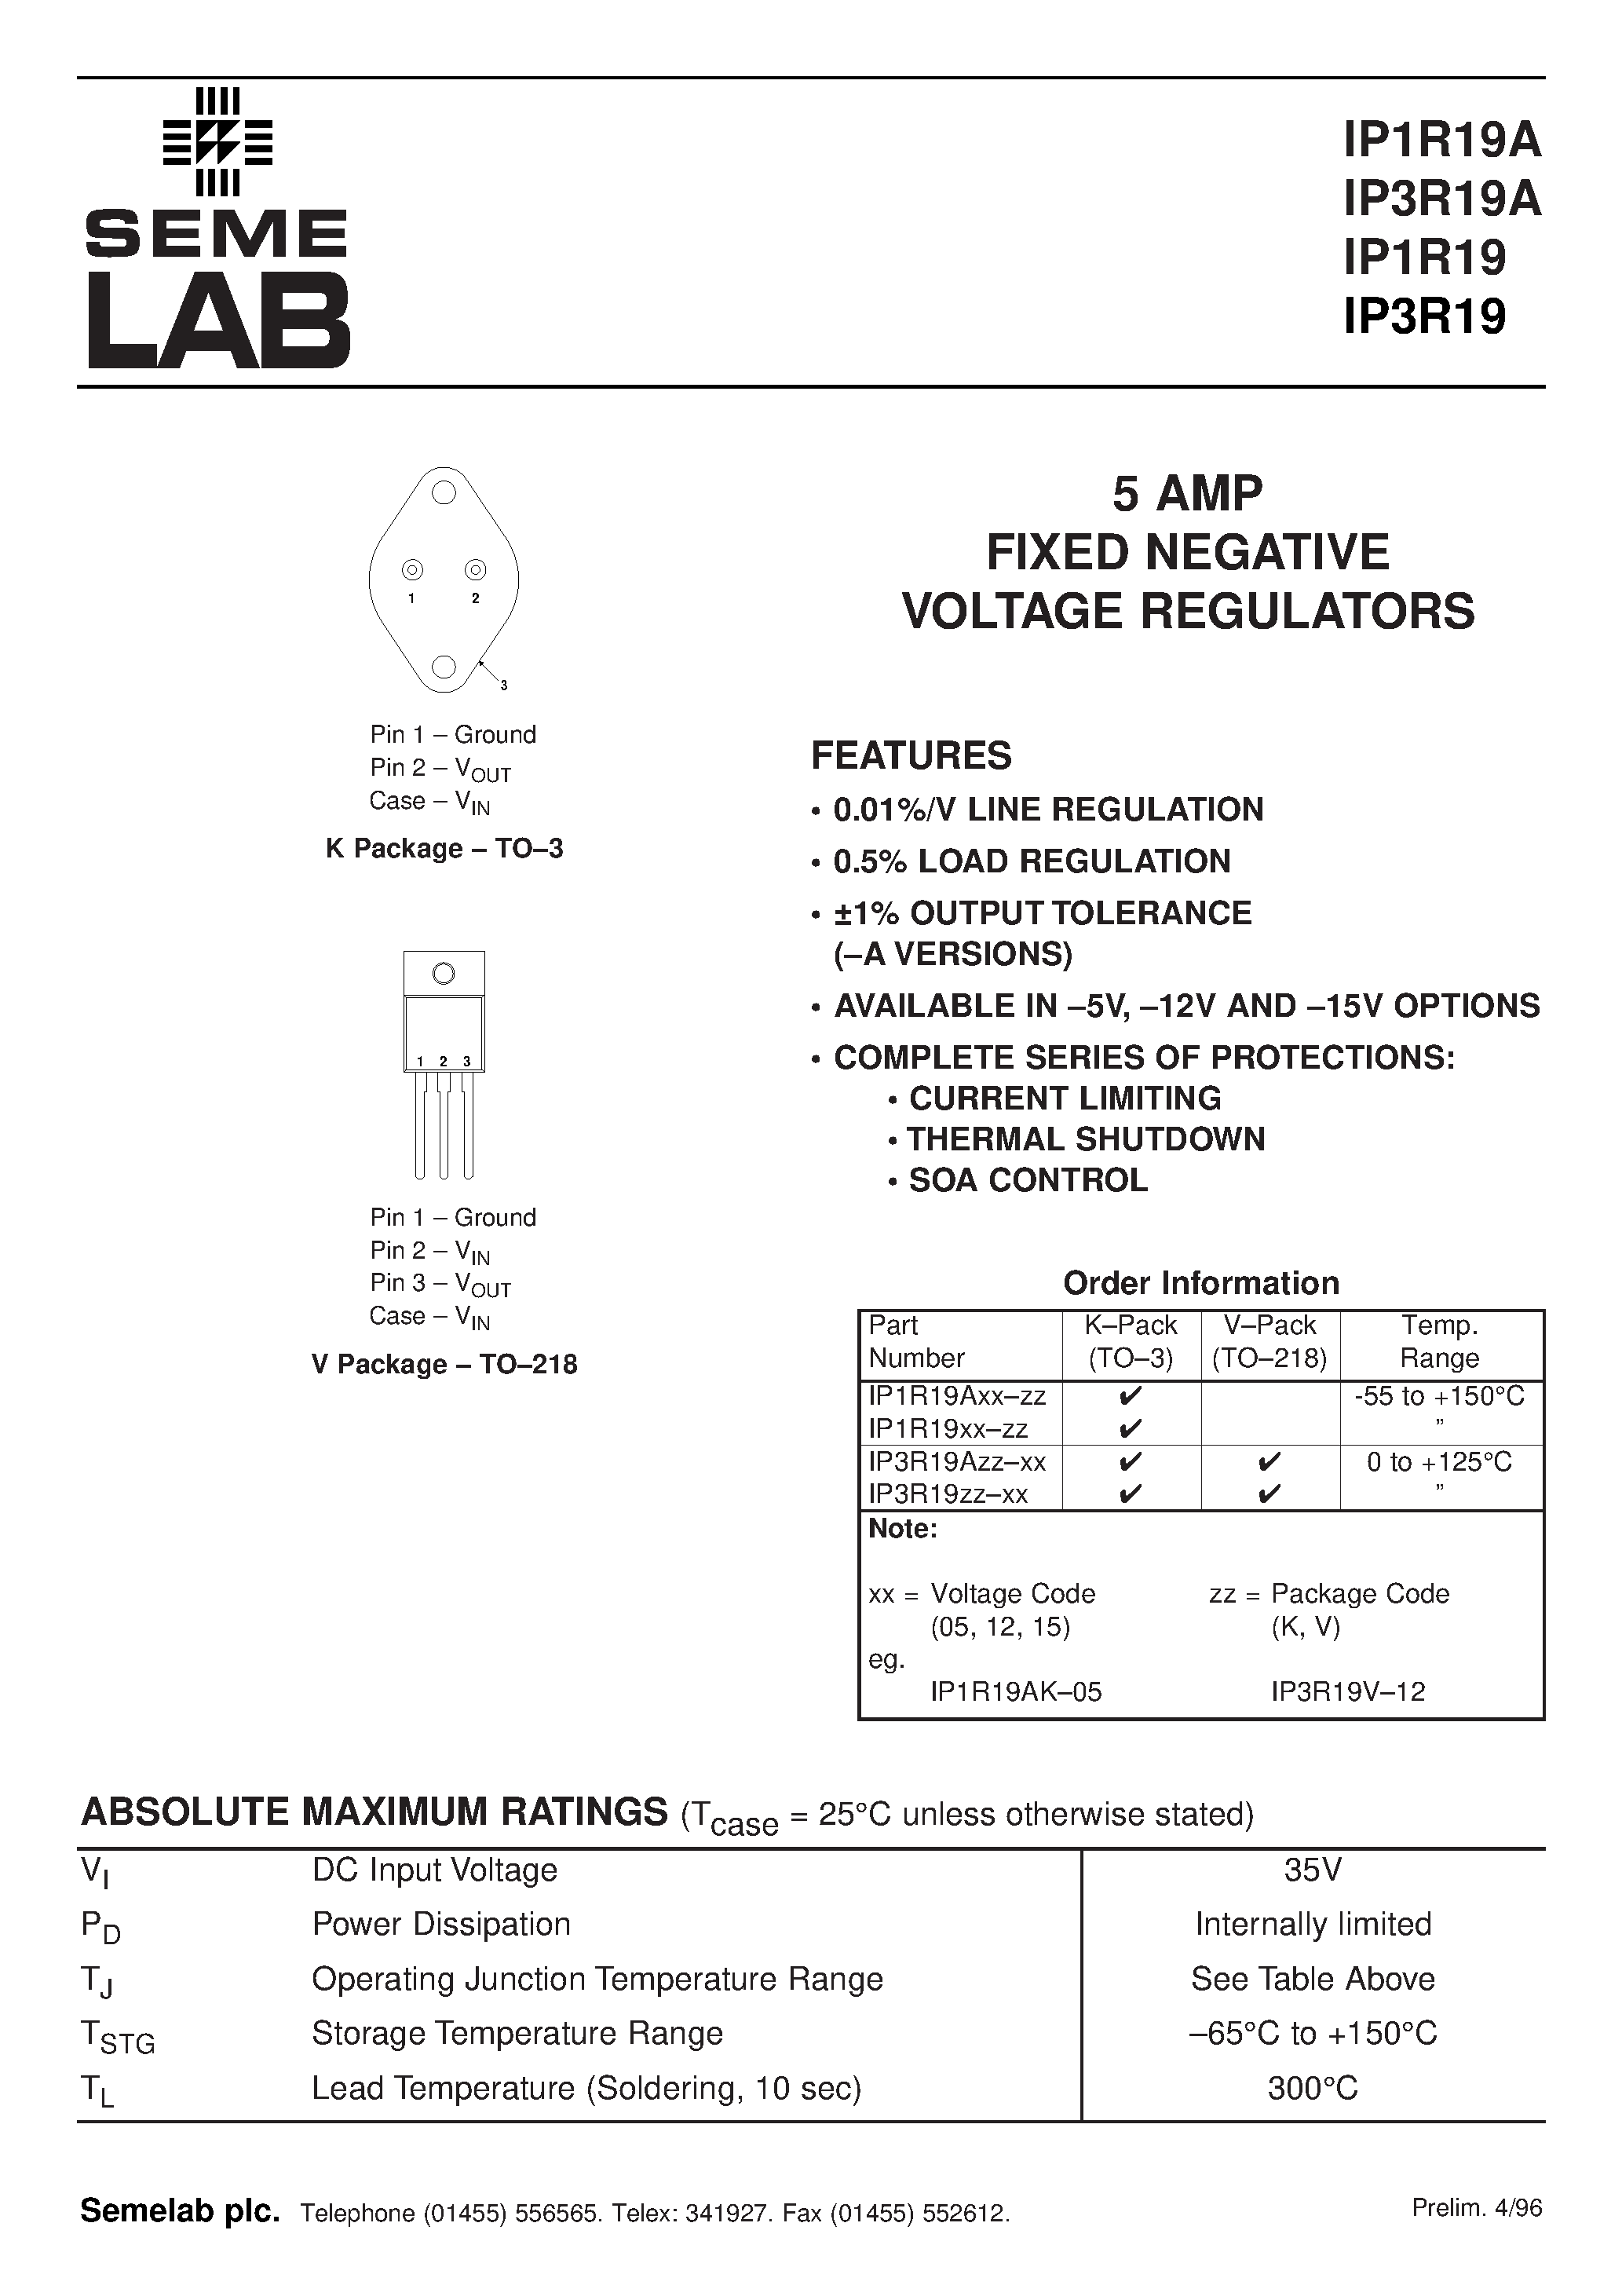 Datasheet IP1R19A12-V - 5 AMP FIXED NEGATIVE VOLTAGE REGULATORS page 1